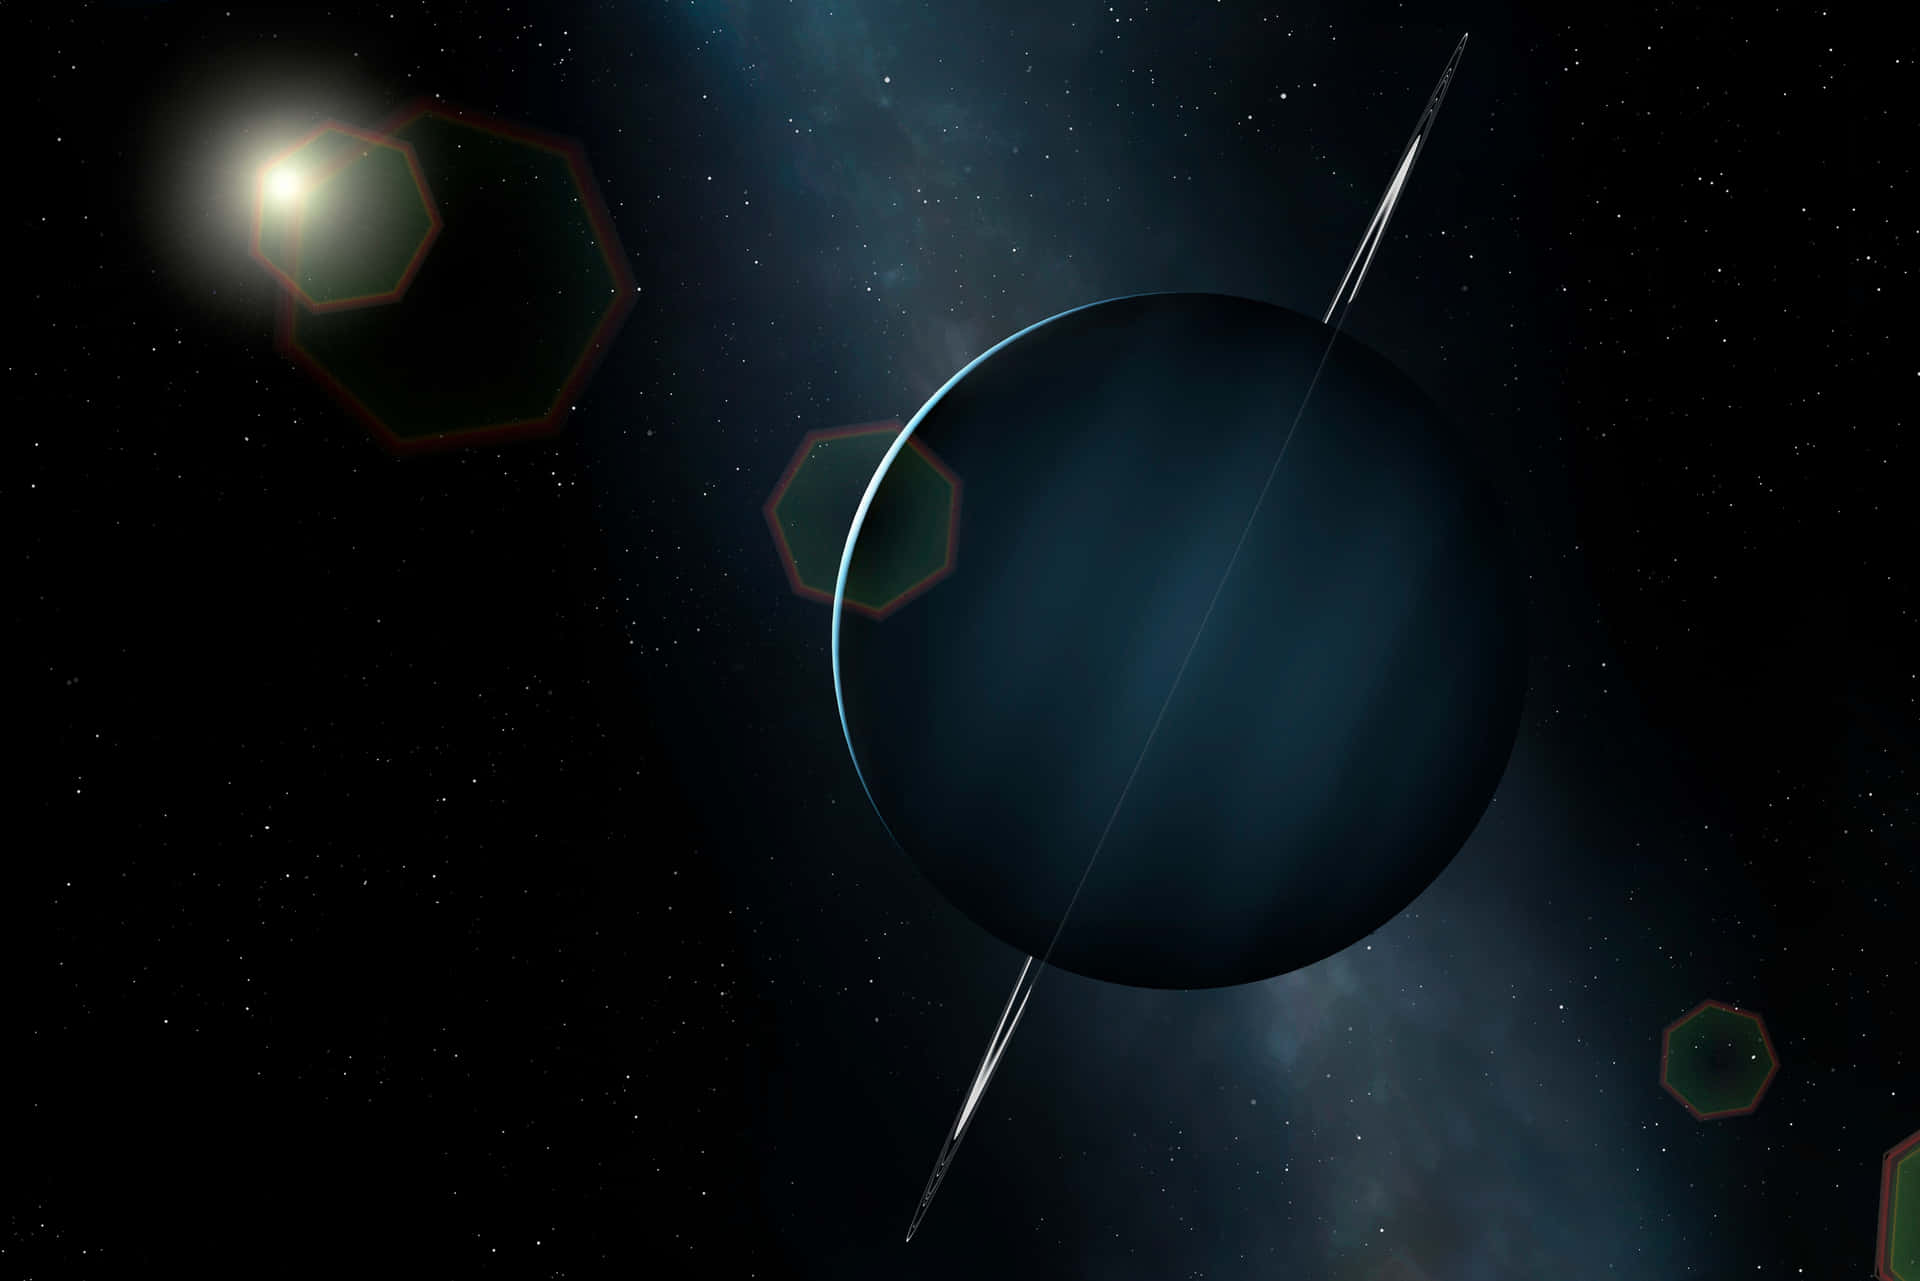 A Mesmerizing High-Resolution Image of Planet Uranus